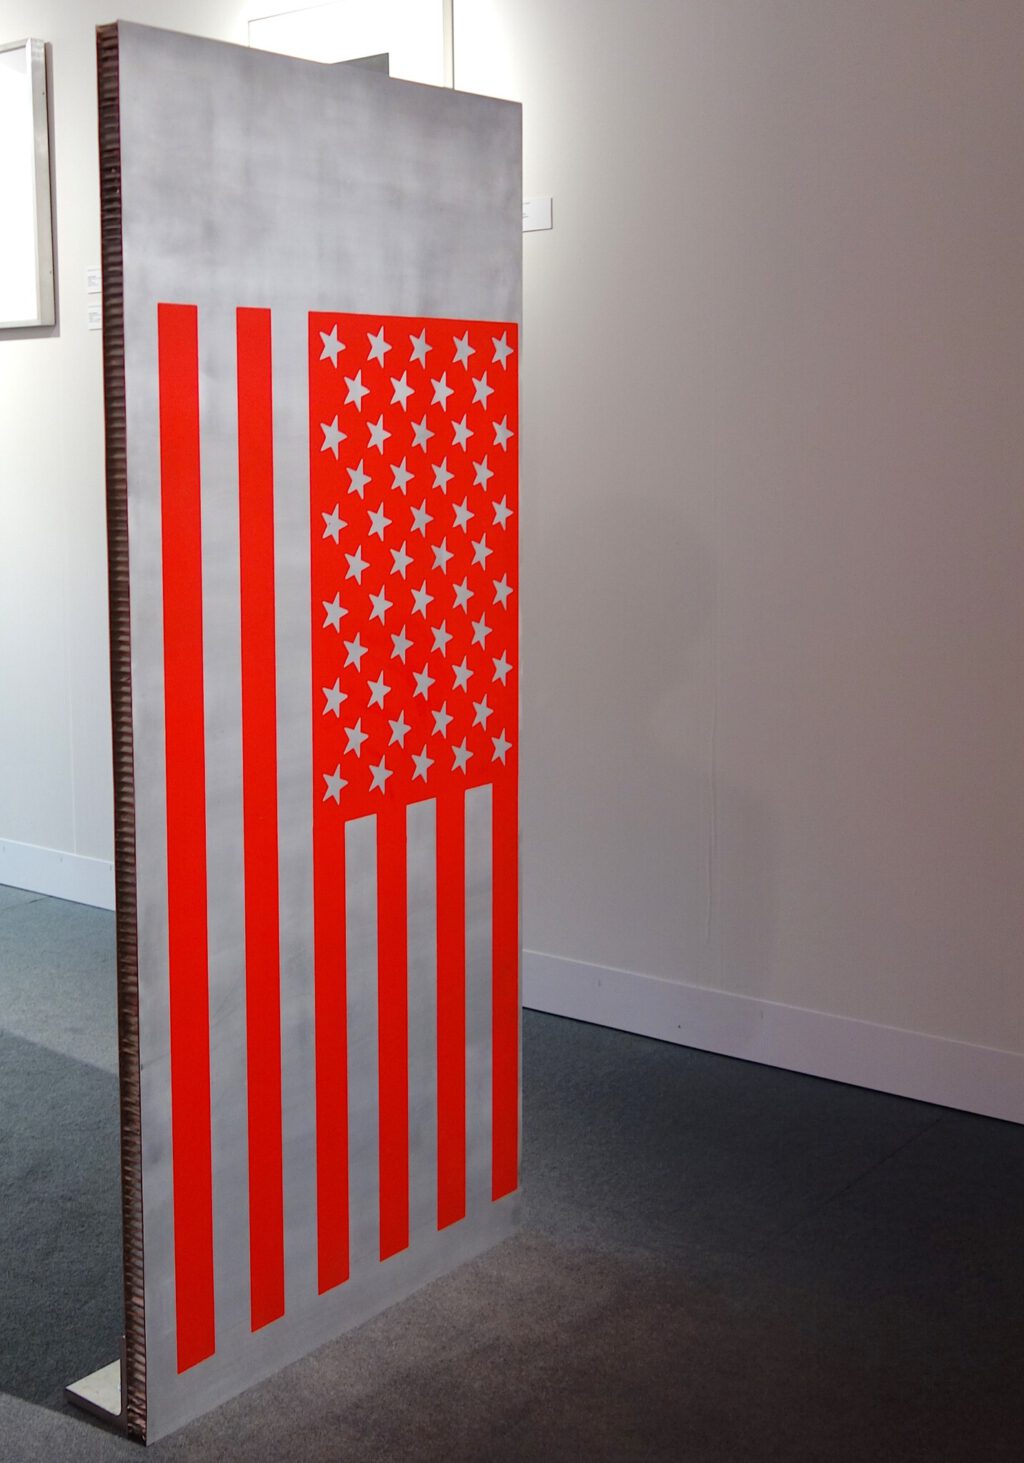 Cady Noland キャディ・ノーランド Untitled (flag) 1992, Silkscreened red ink on aluminium, 140 x 66 x 13 cm